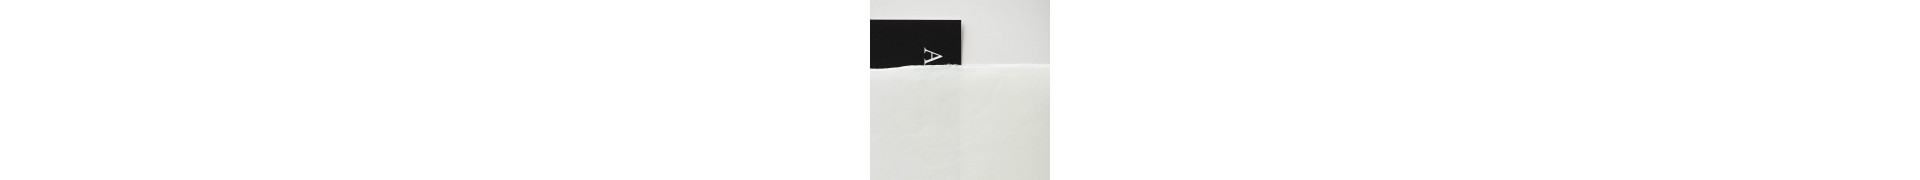 _Papier du monde AMT Shiramine select - 110g - F:43 x 52 cm 